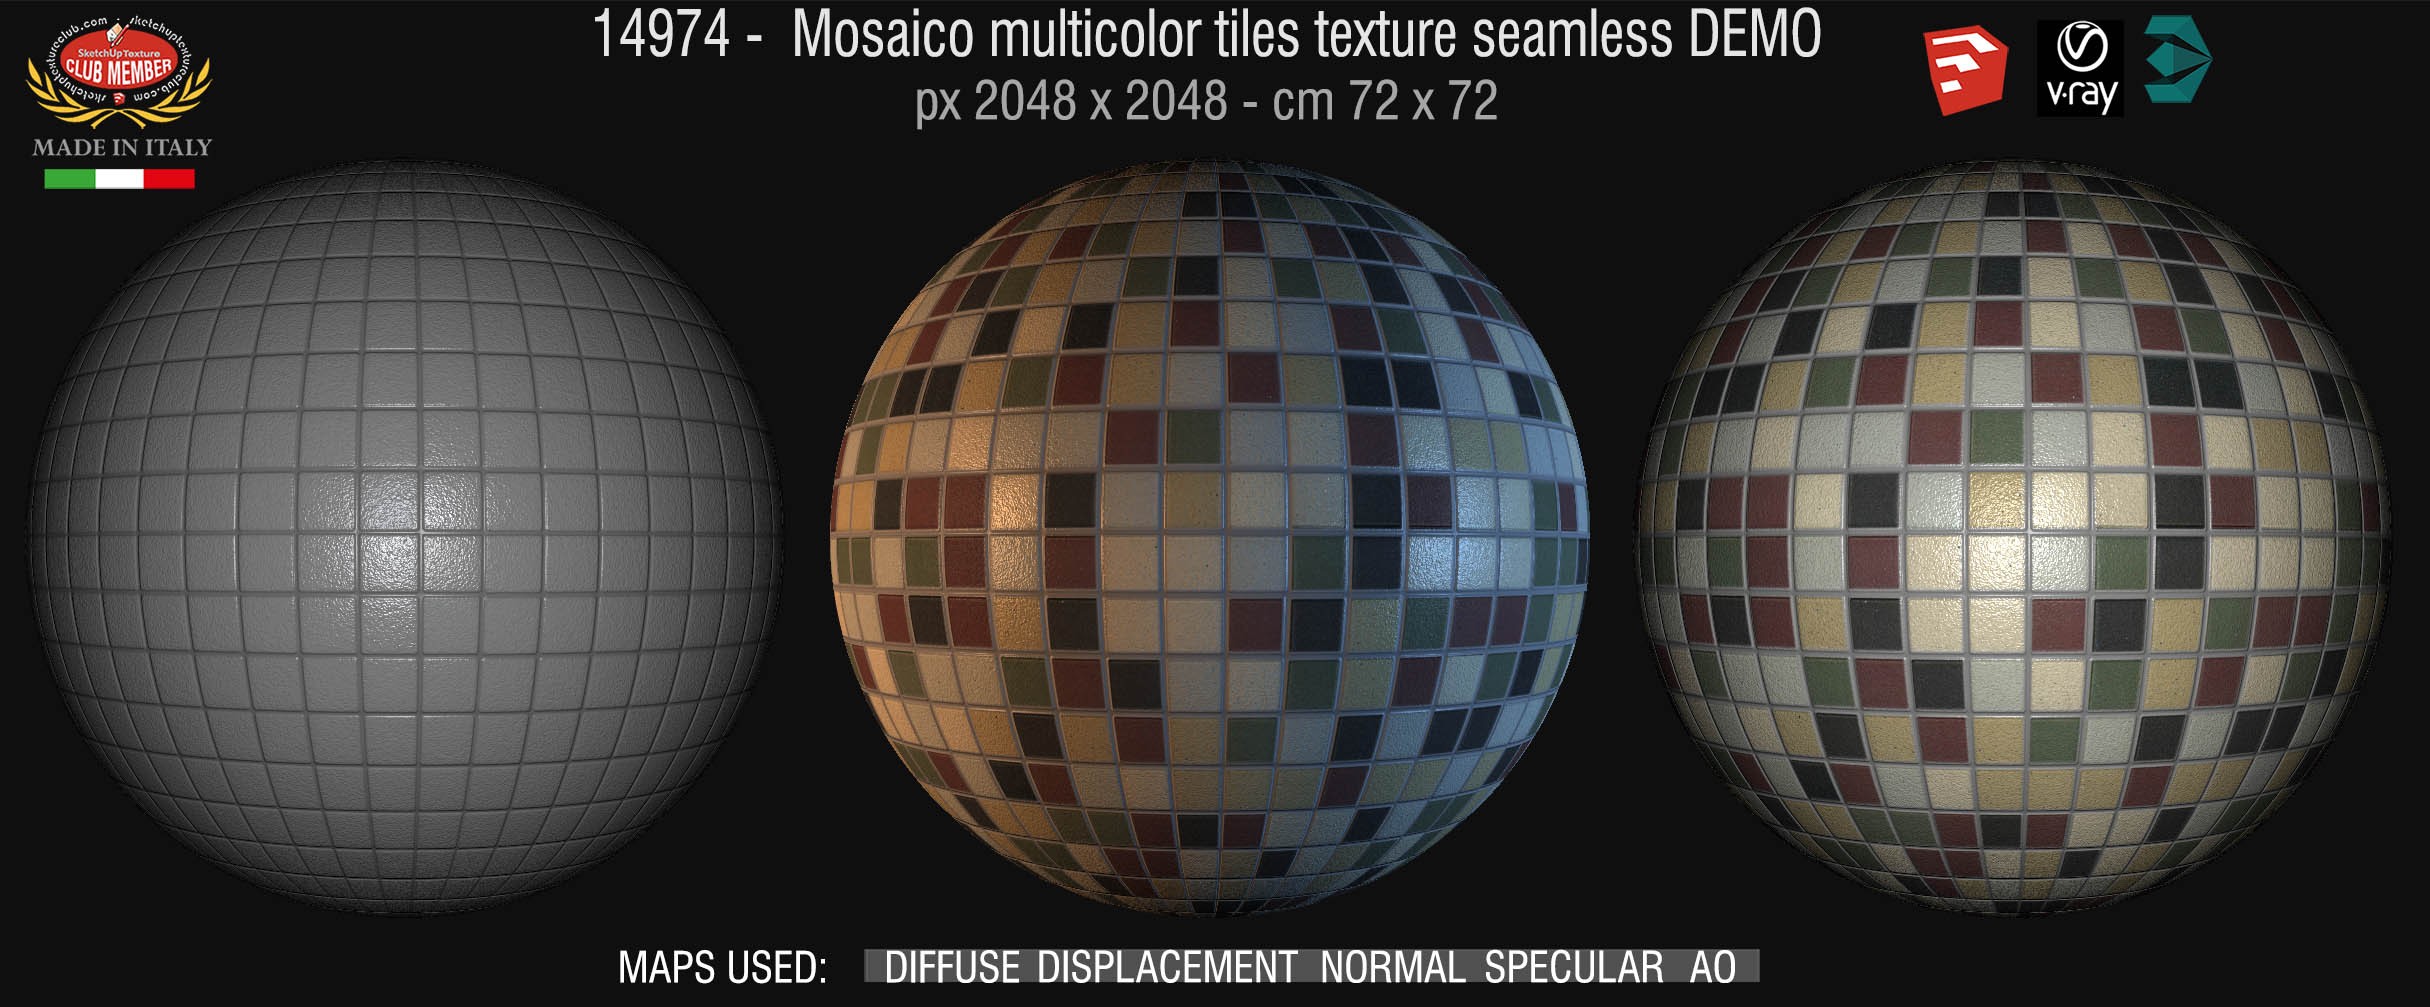 14974 Mosaico multicolor tiles texture seamless + maps DEMO